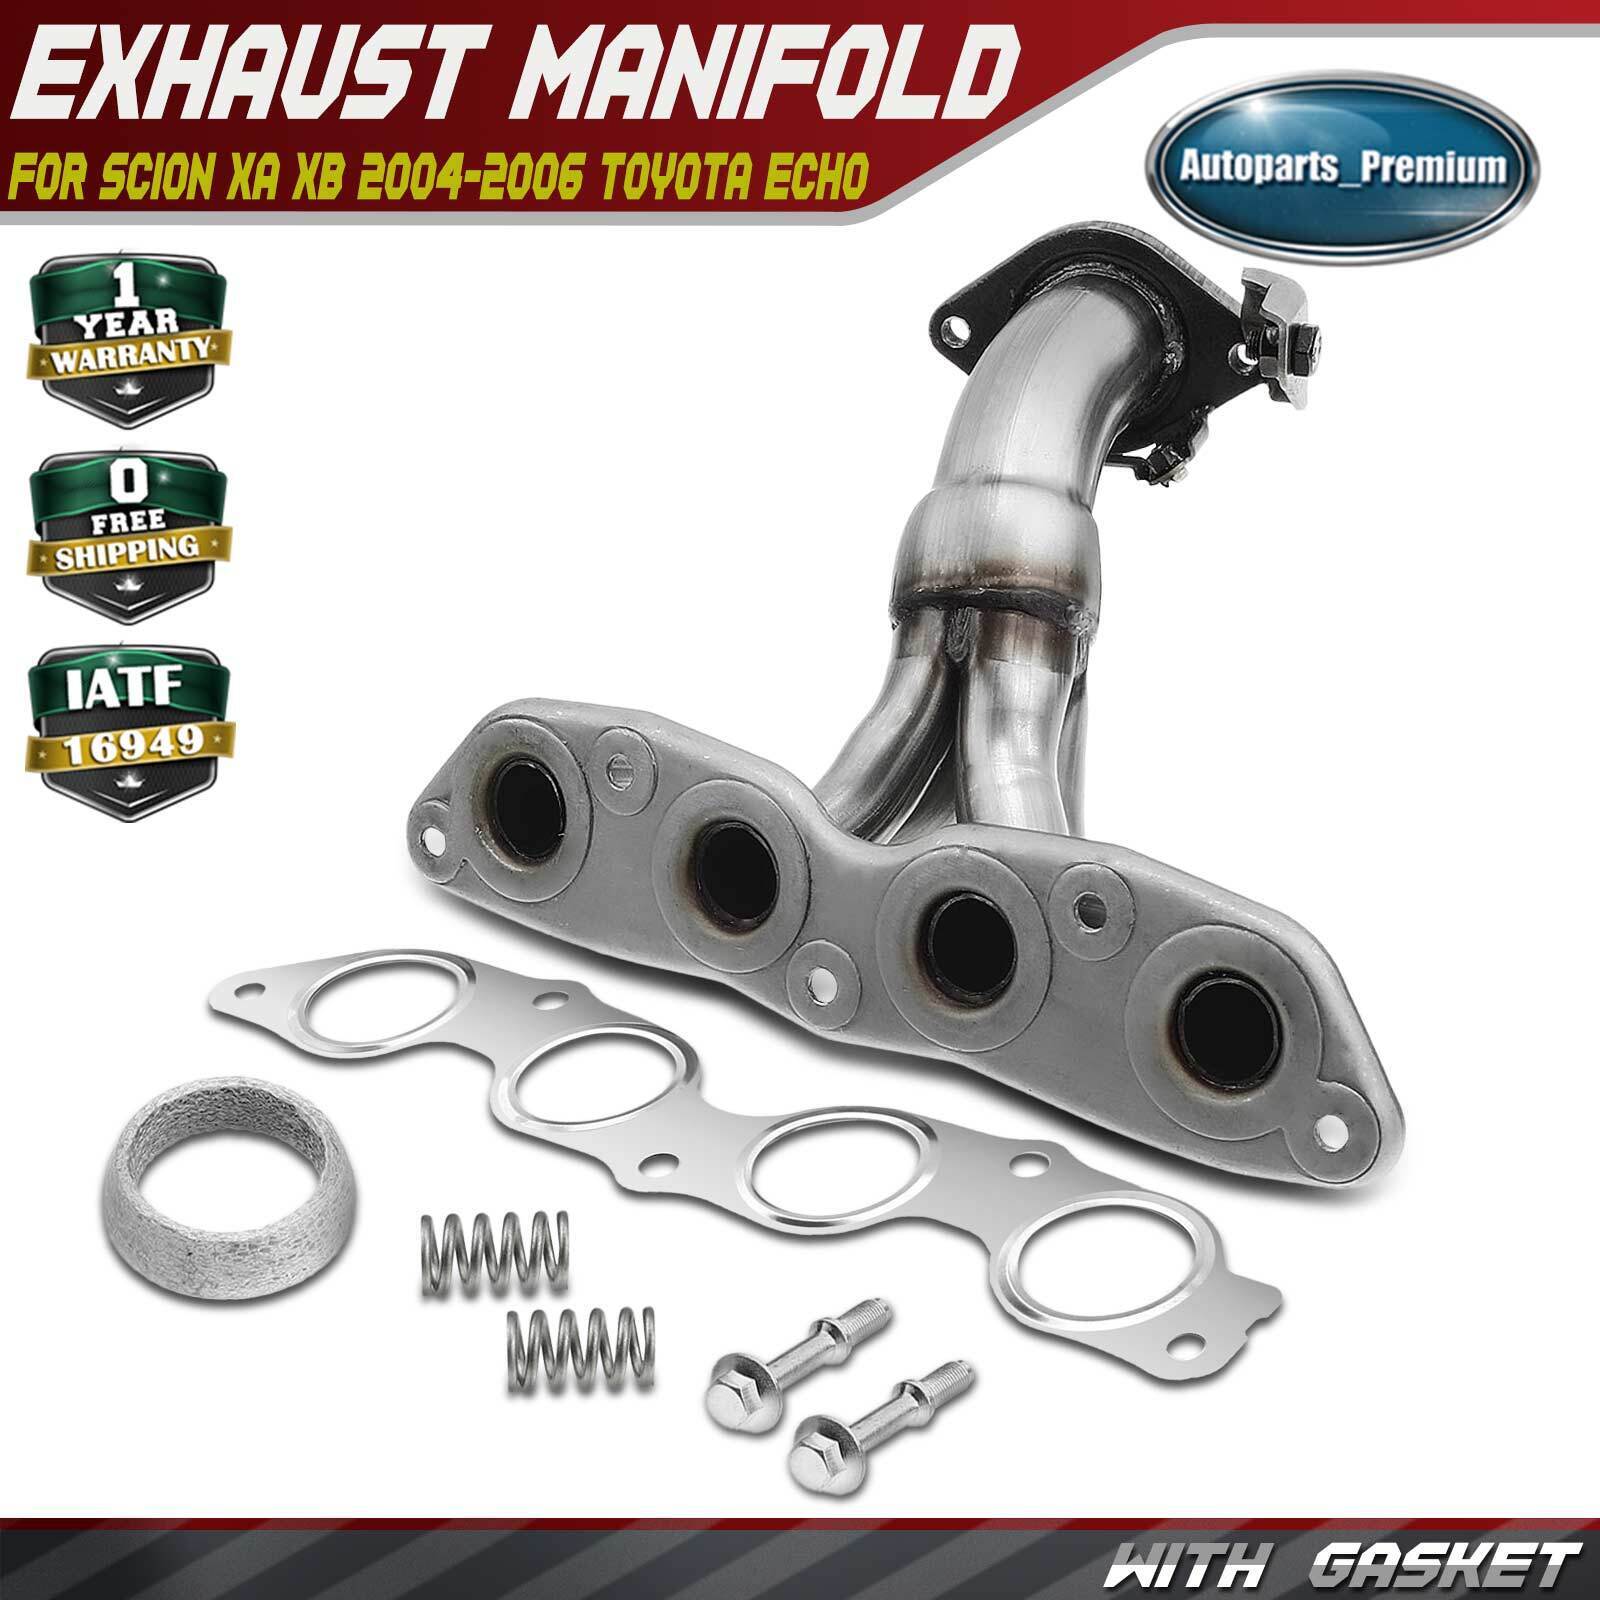 Exhaust Manifold w/ Gasket Kit for Scion xA xB 2004-2006 Toyota Echo 00-05 1.5L